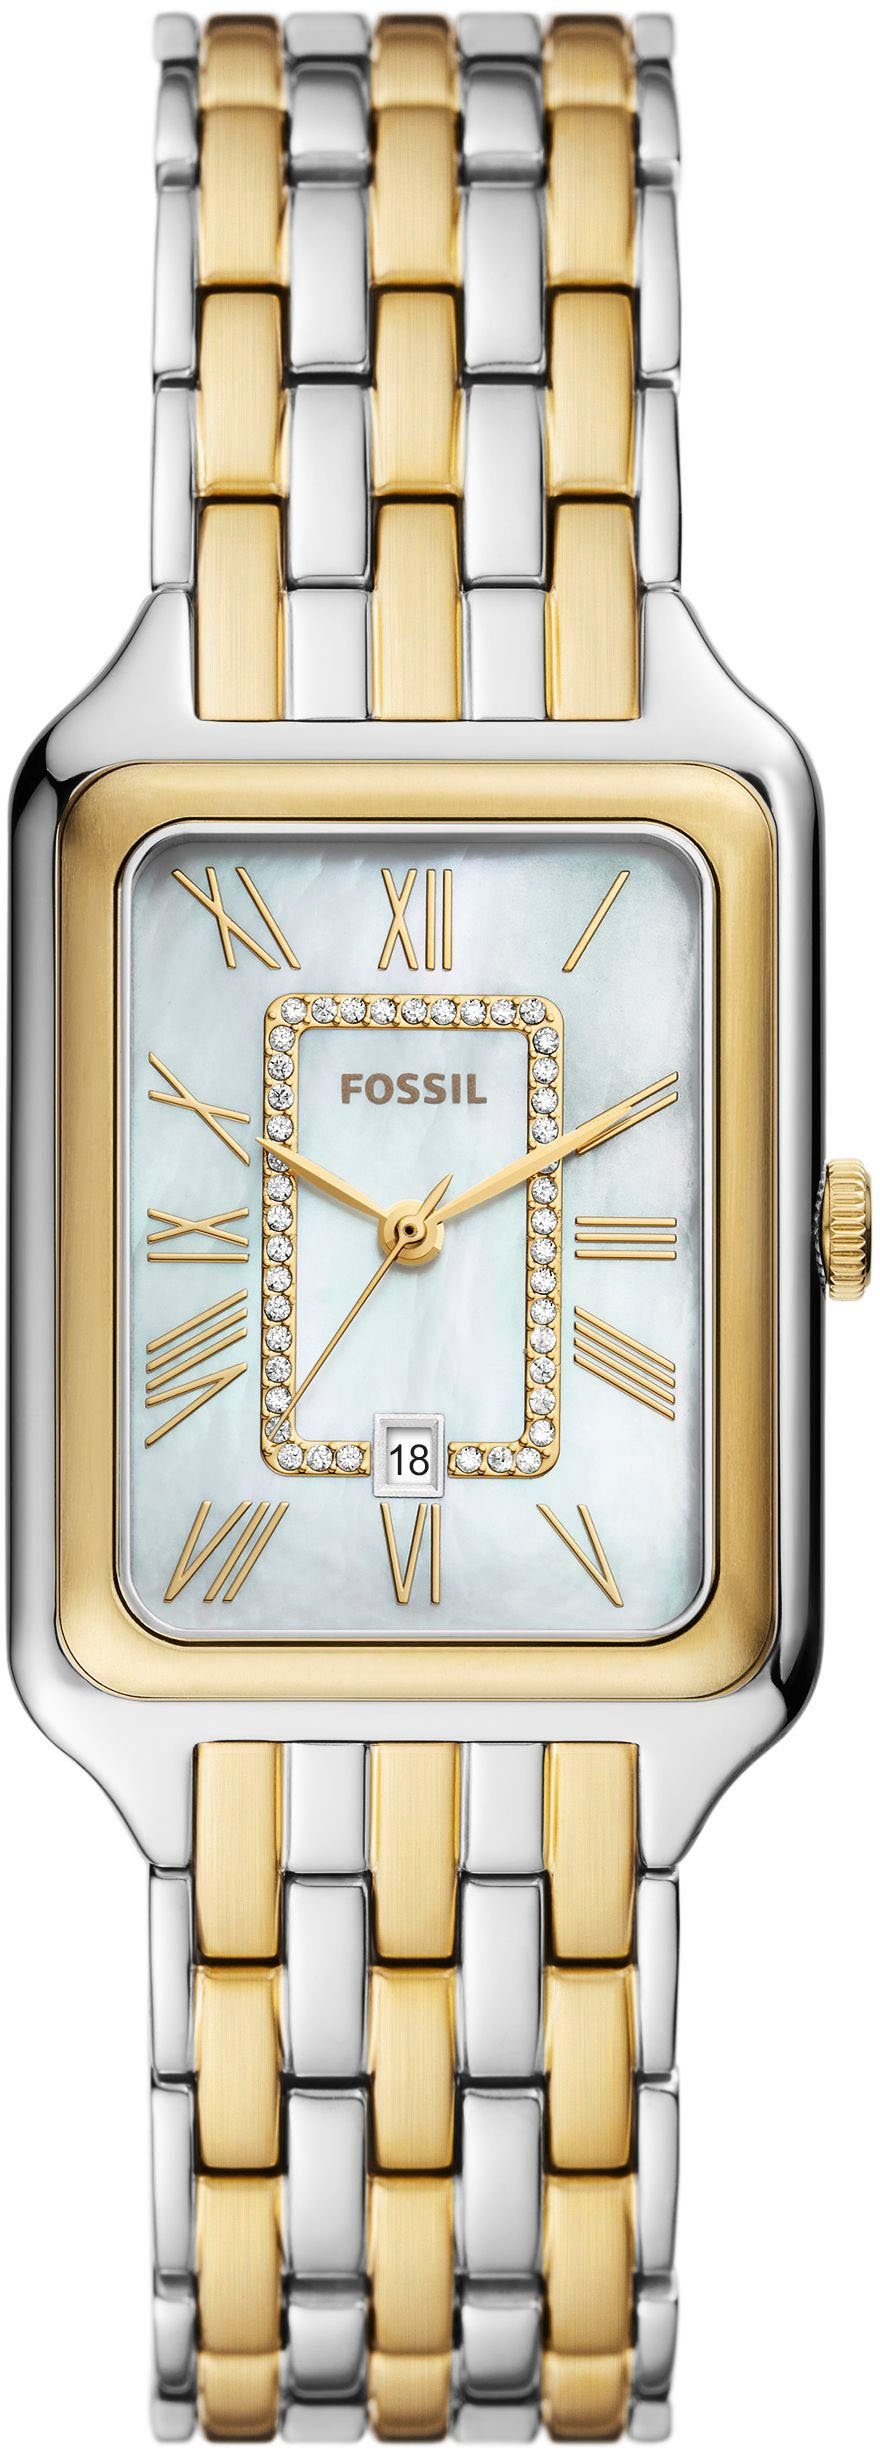 Fossil Quarzuhr RAQUEL, ES5305, Armbanduhr, Damenuhr, Perlmutt-Zifferblatt, Datum